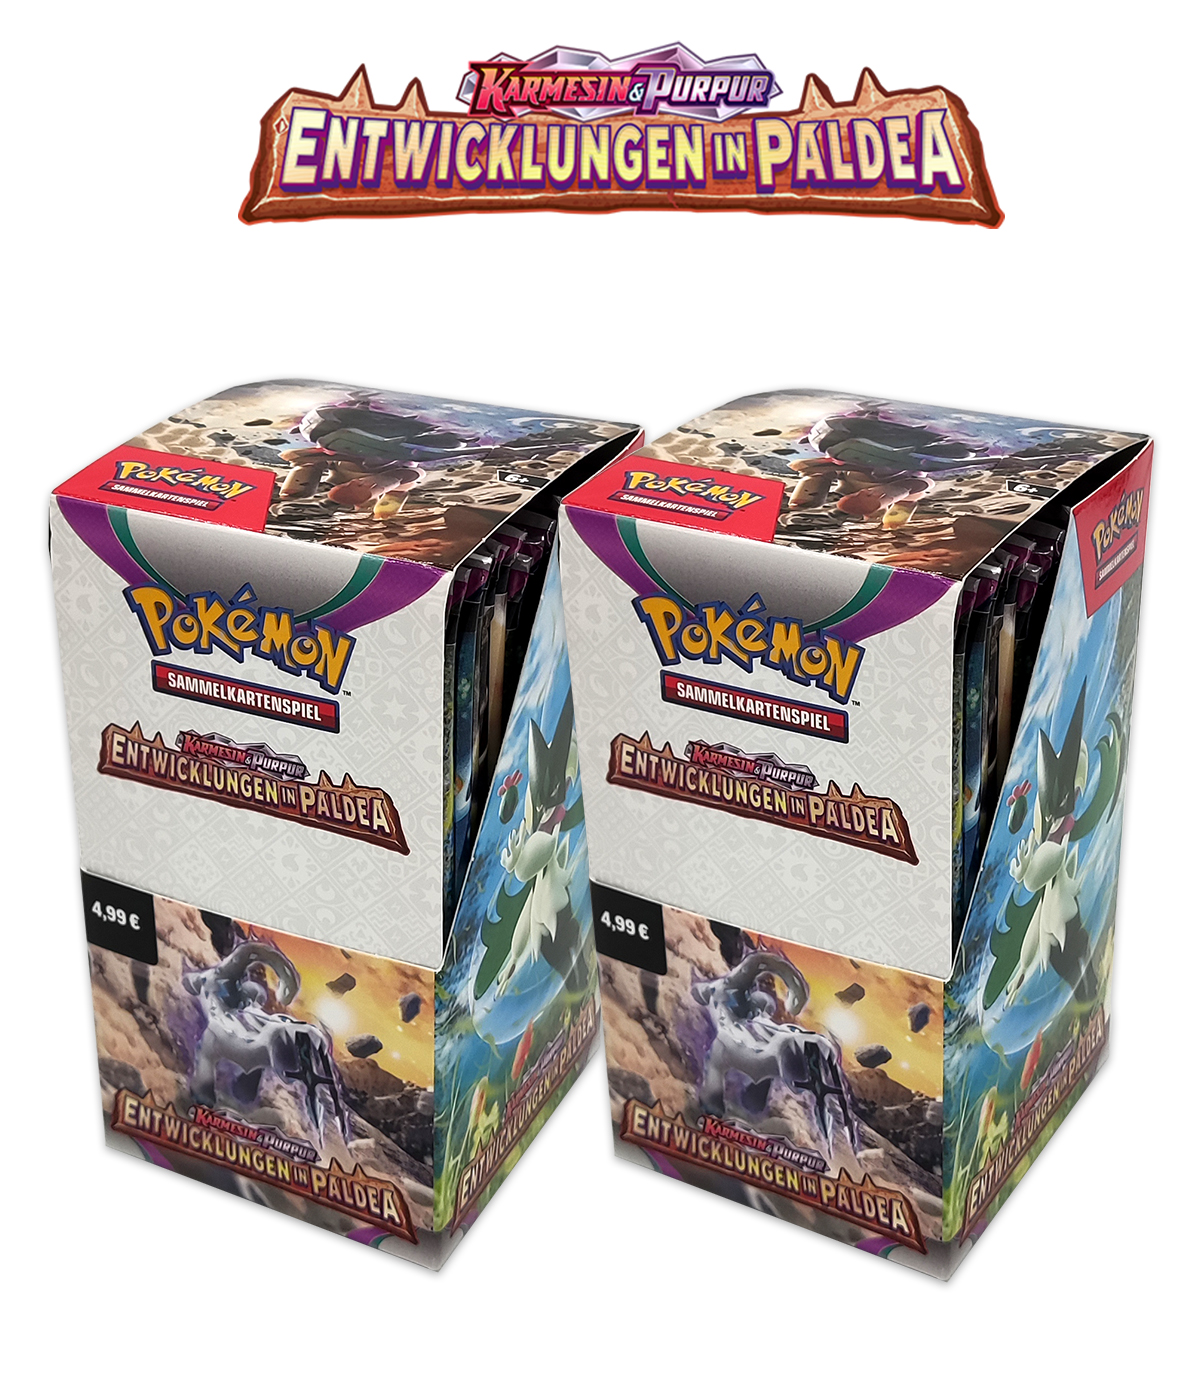 Pokémon Double Bundle "Entwicklungen in Paldea " - 2 Displays mit je 18 Boosterpacks